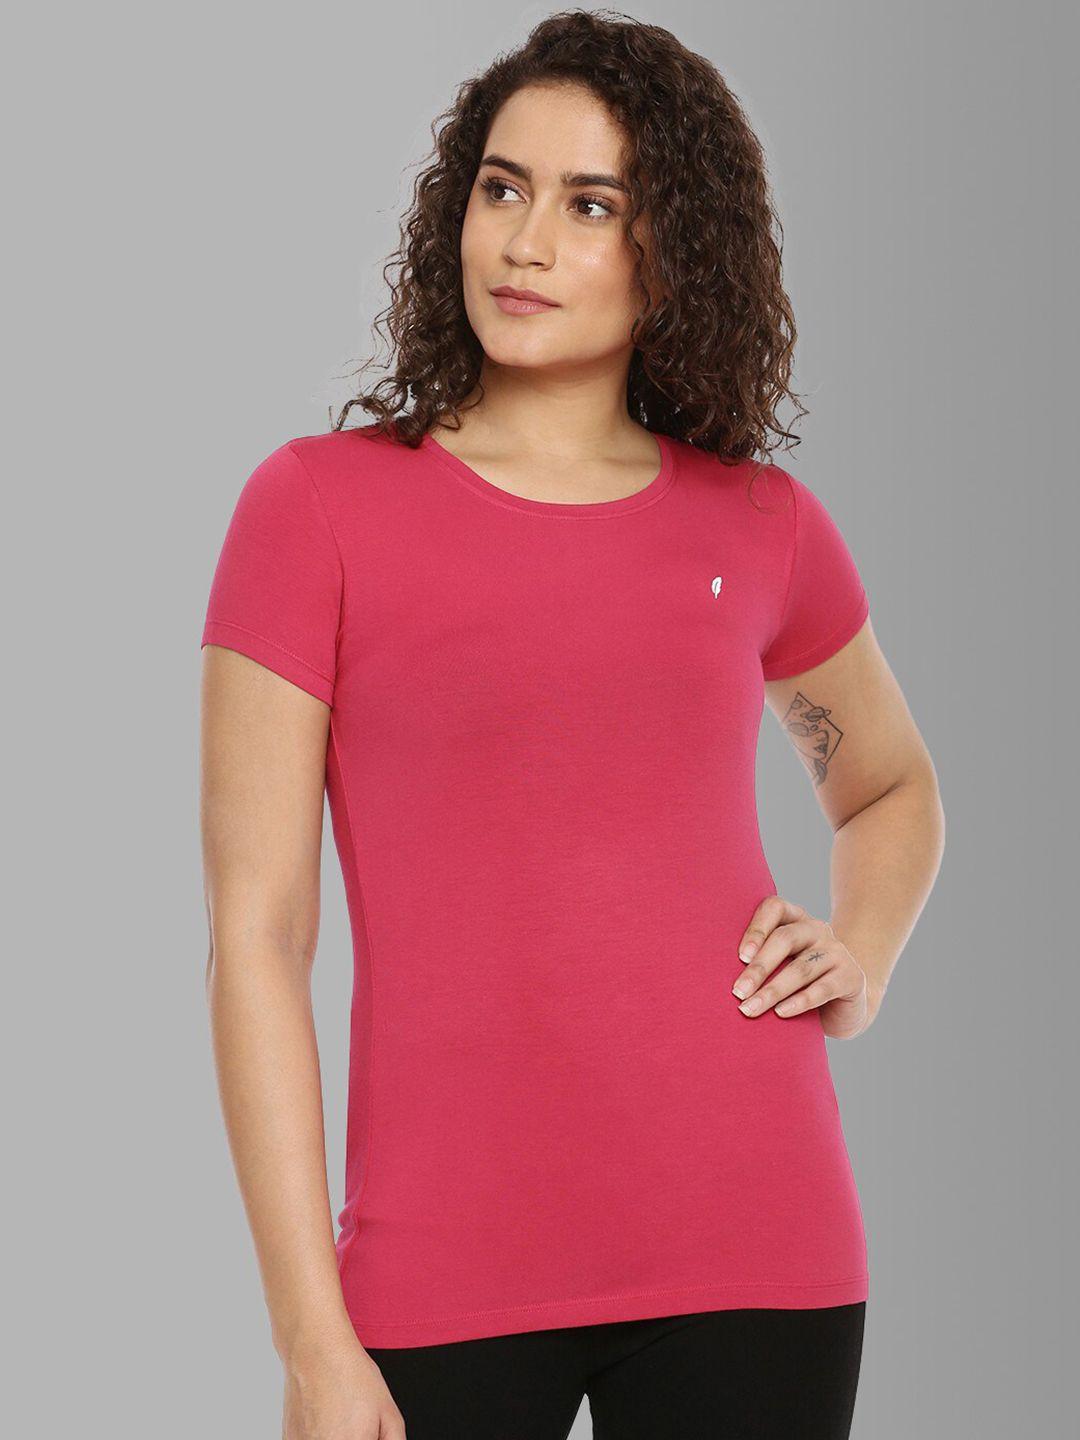 feather soft elite women pink slim fit running t-shirt